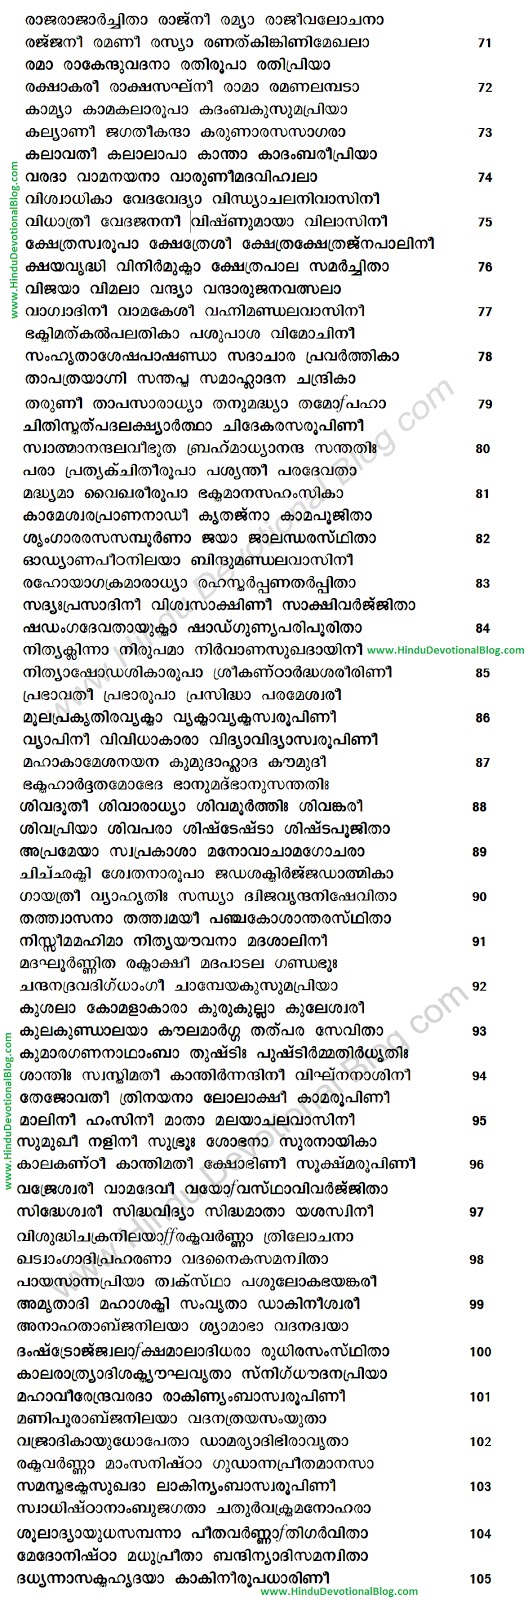 lalitha sahasranama stotram in telugu pdf free download